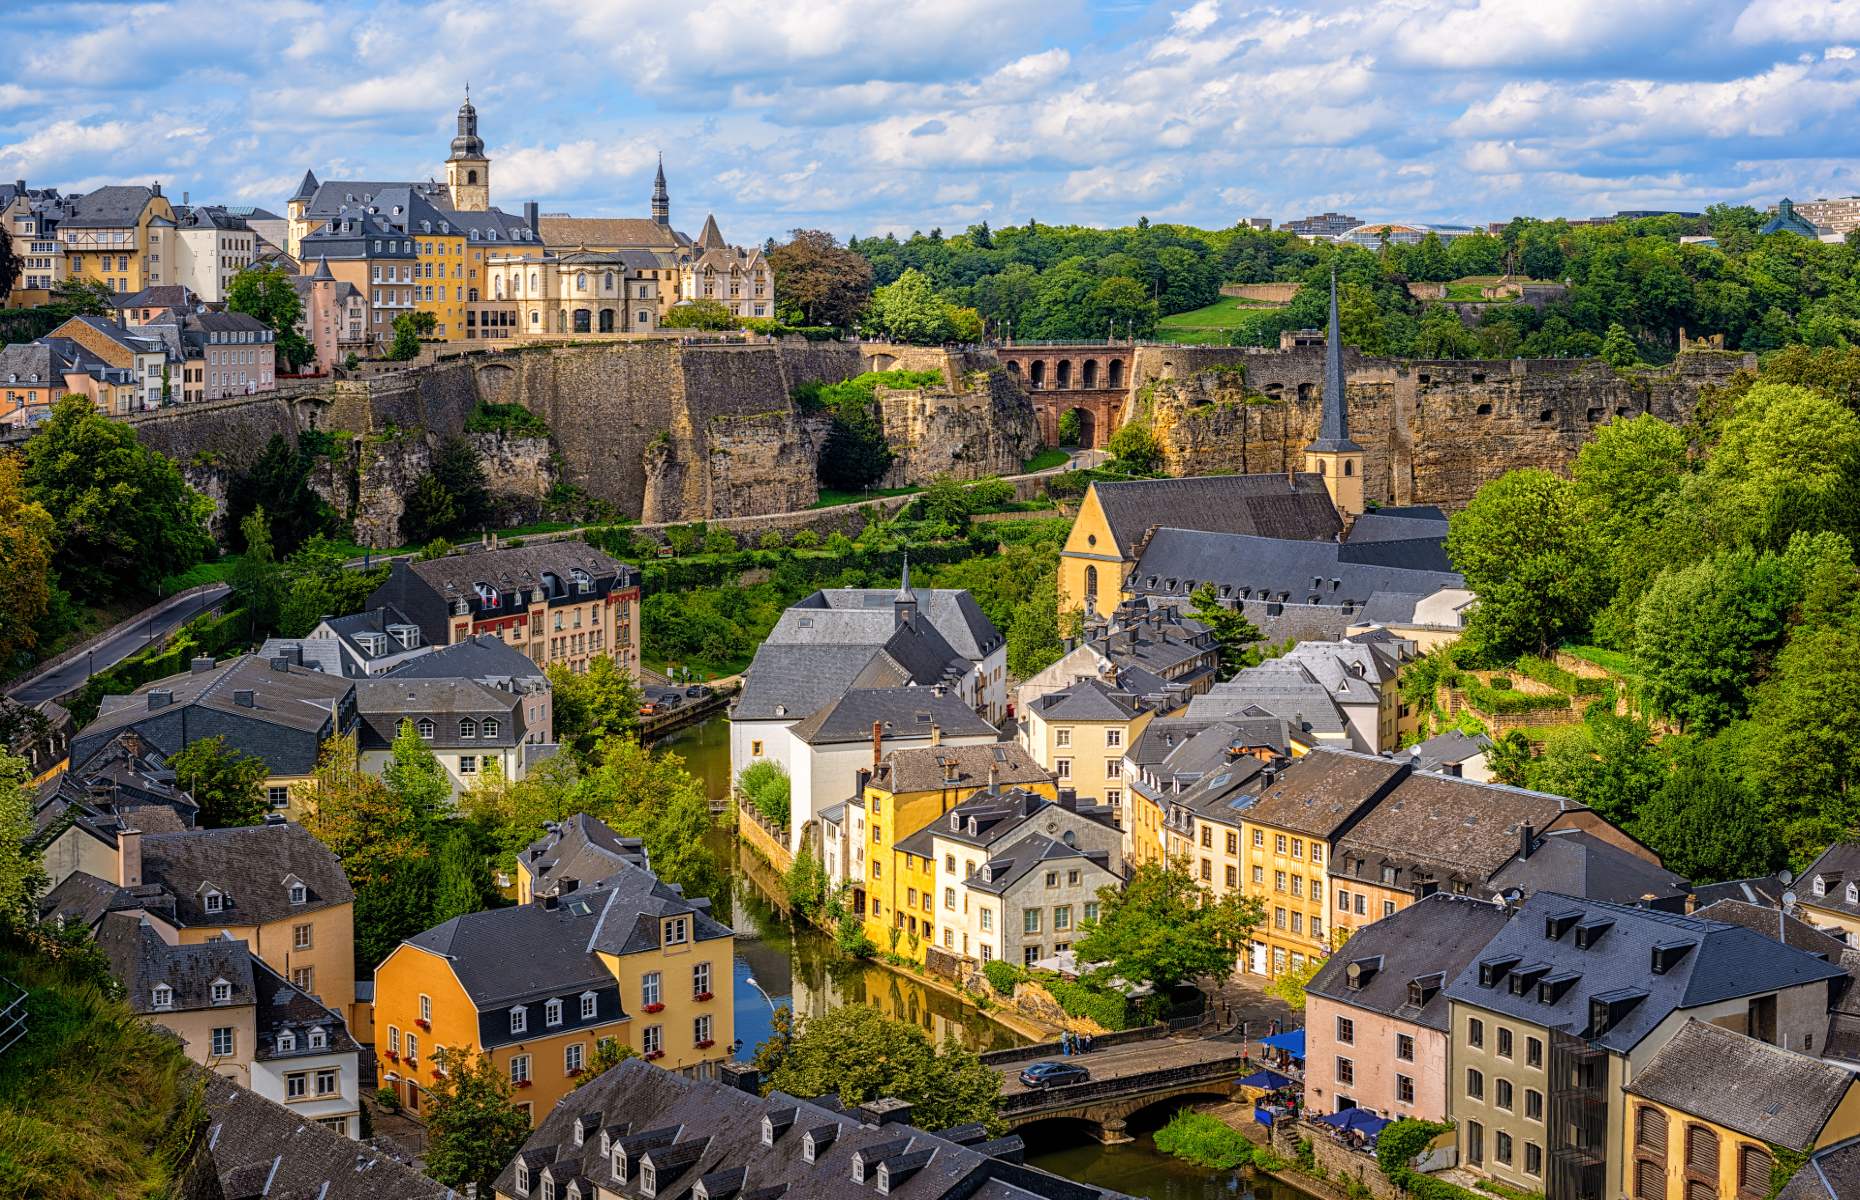 Luxembourg City, Luxembourg (Image: Boris Stroujko/Shutterstock)